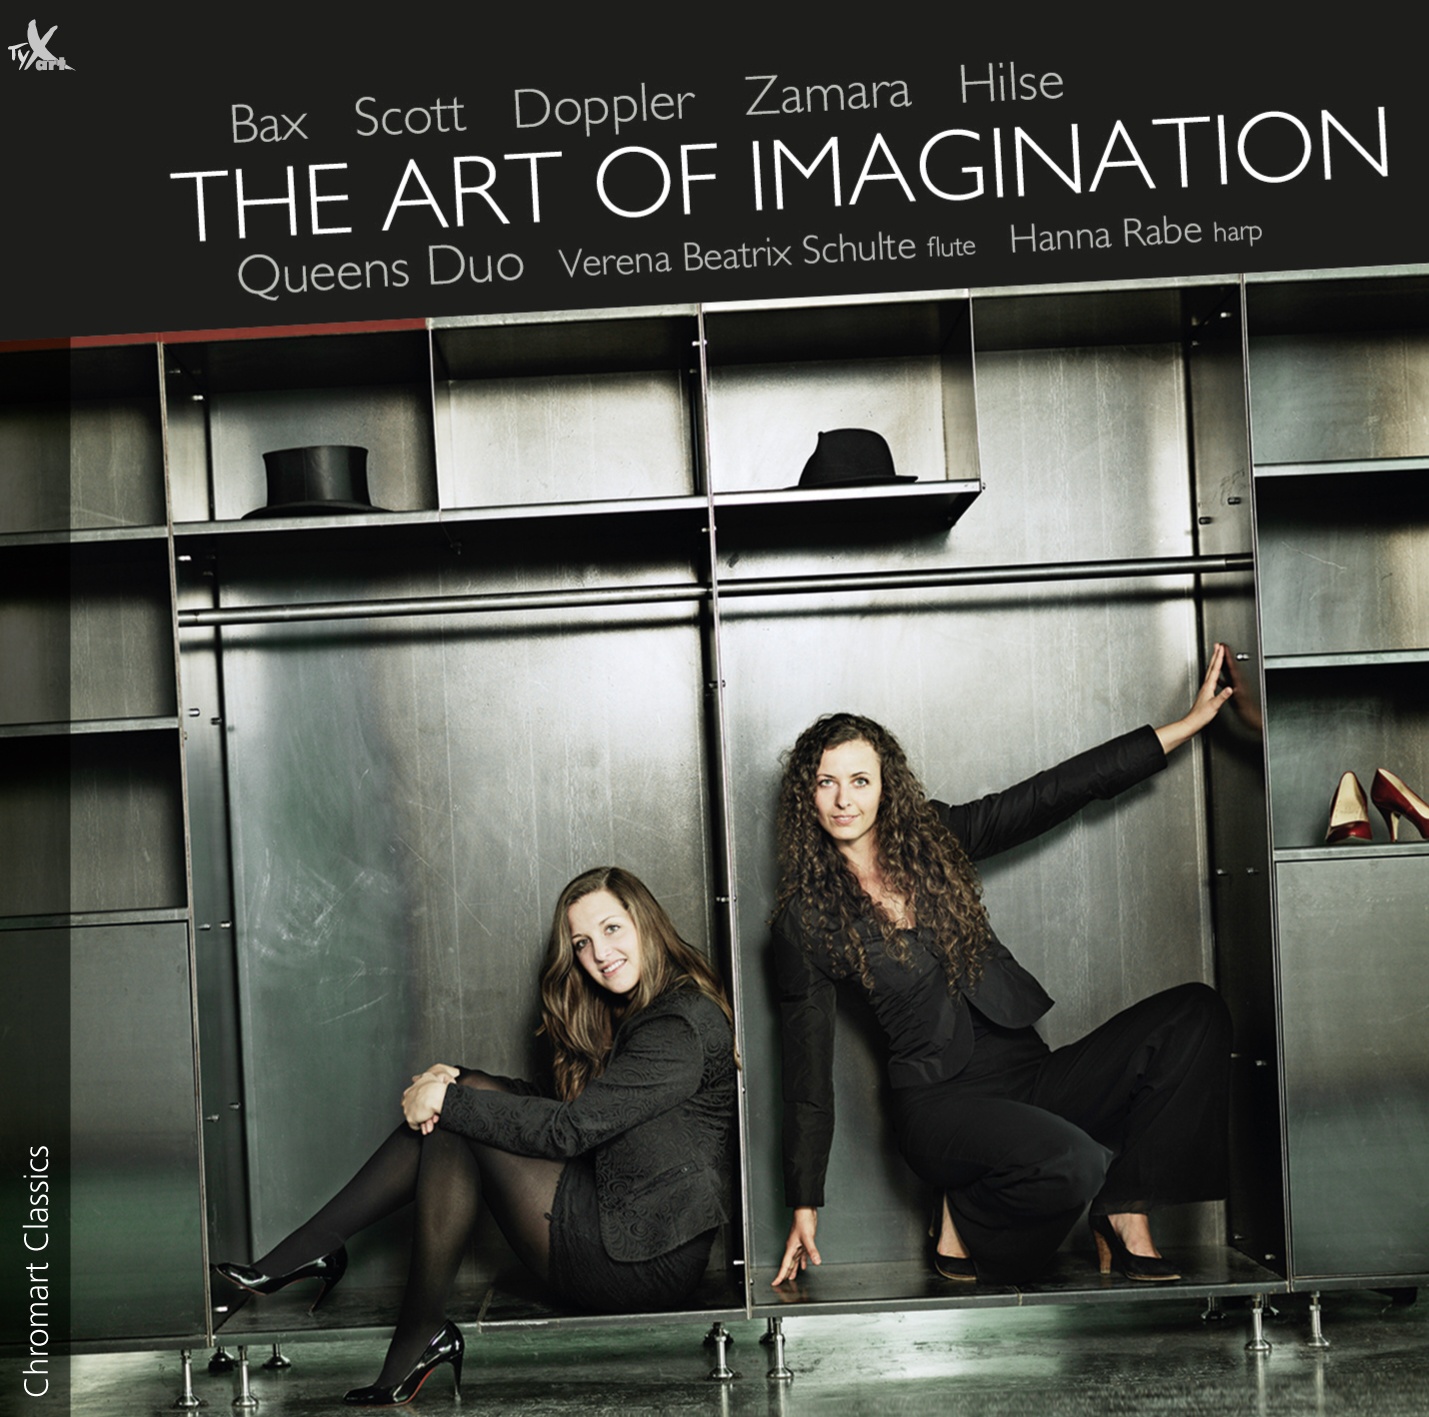 THE ART OF IMAGINATION - Queens Duo: Verena Beatrix Schulte, Flöte und Hanna Rabe, Harfe